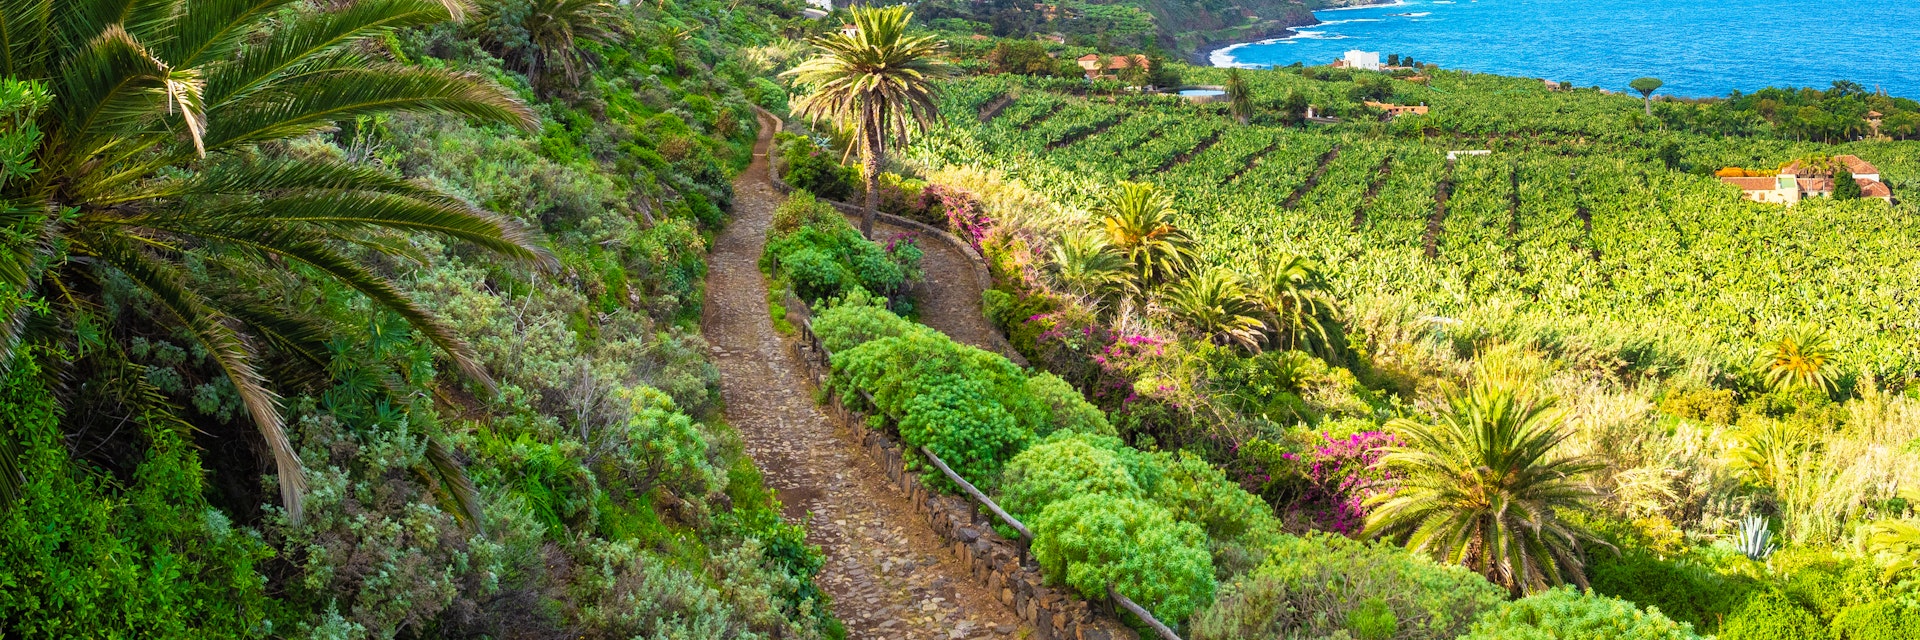 Landscape with North Tenerife coast on Canary island, Spain